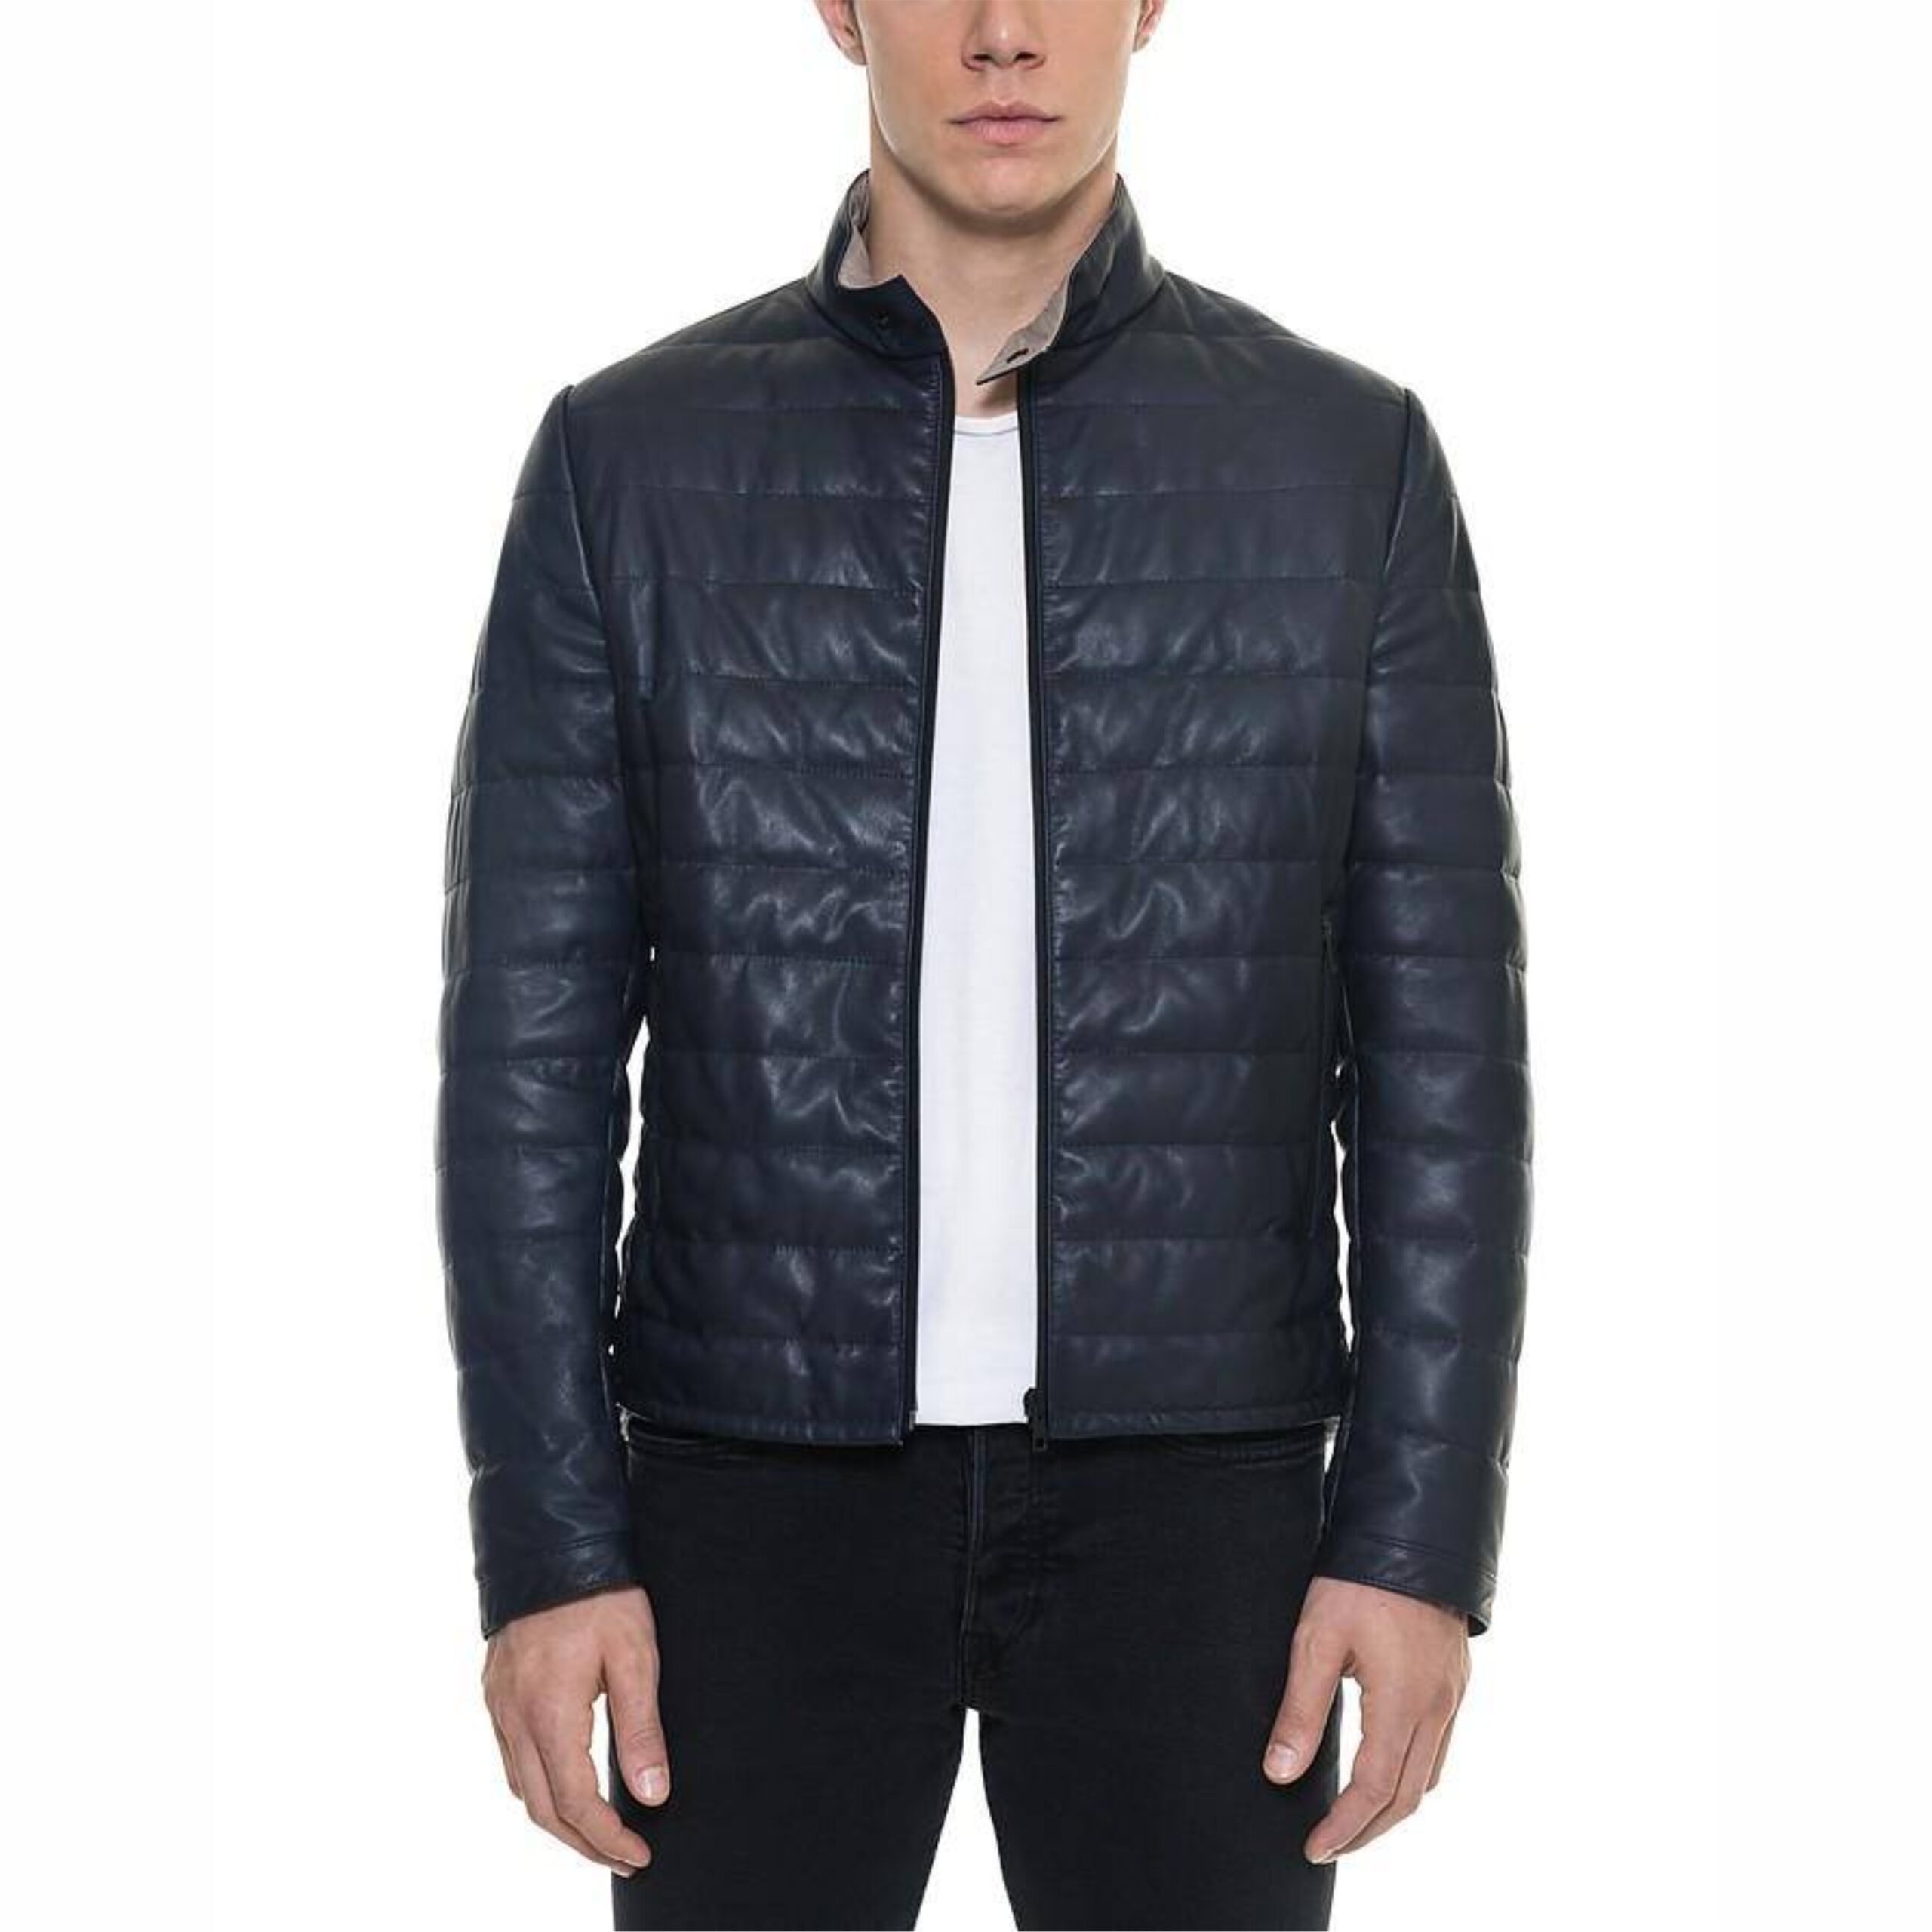 Topman faux leather puffer jacket in black | ASOS